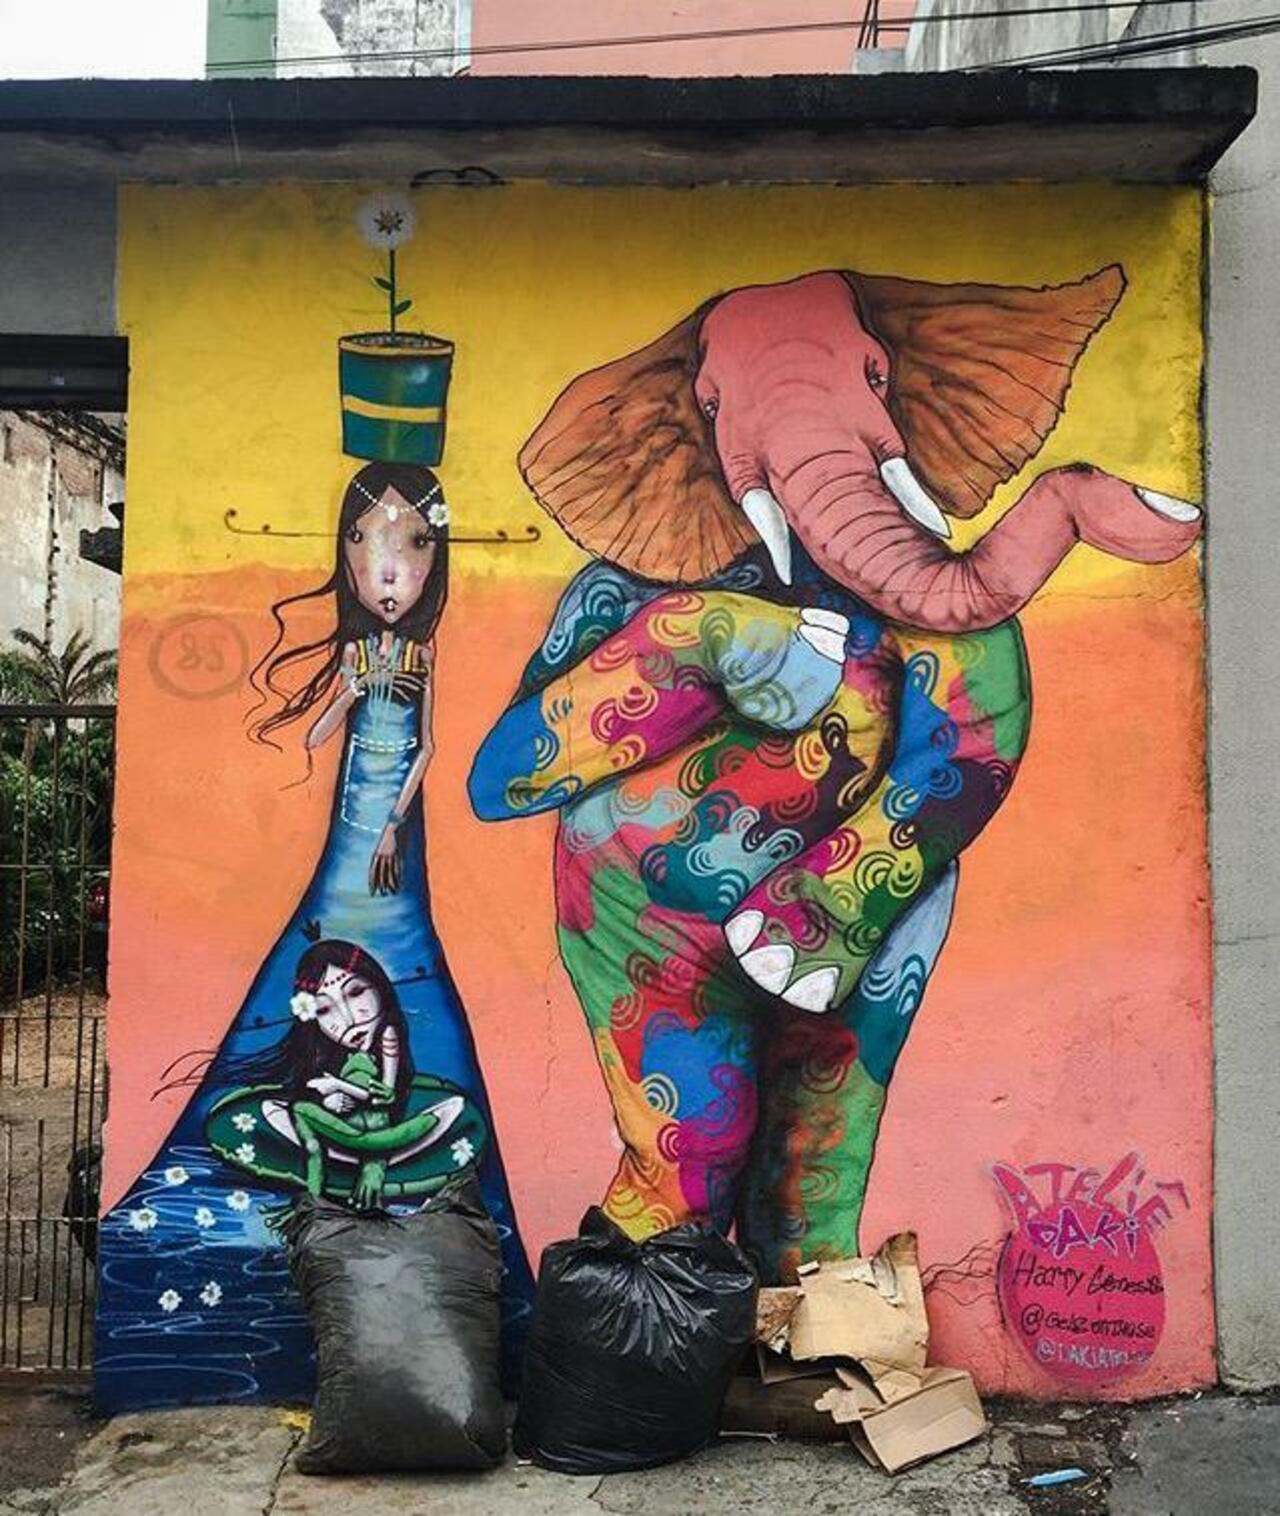 Street Art by Harry Geneis & Gelson in São Paulo 

#art #mural #graffiti #streetart http://t.co/RkgcoH3nVC